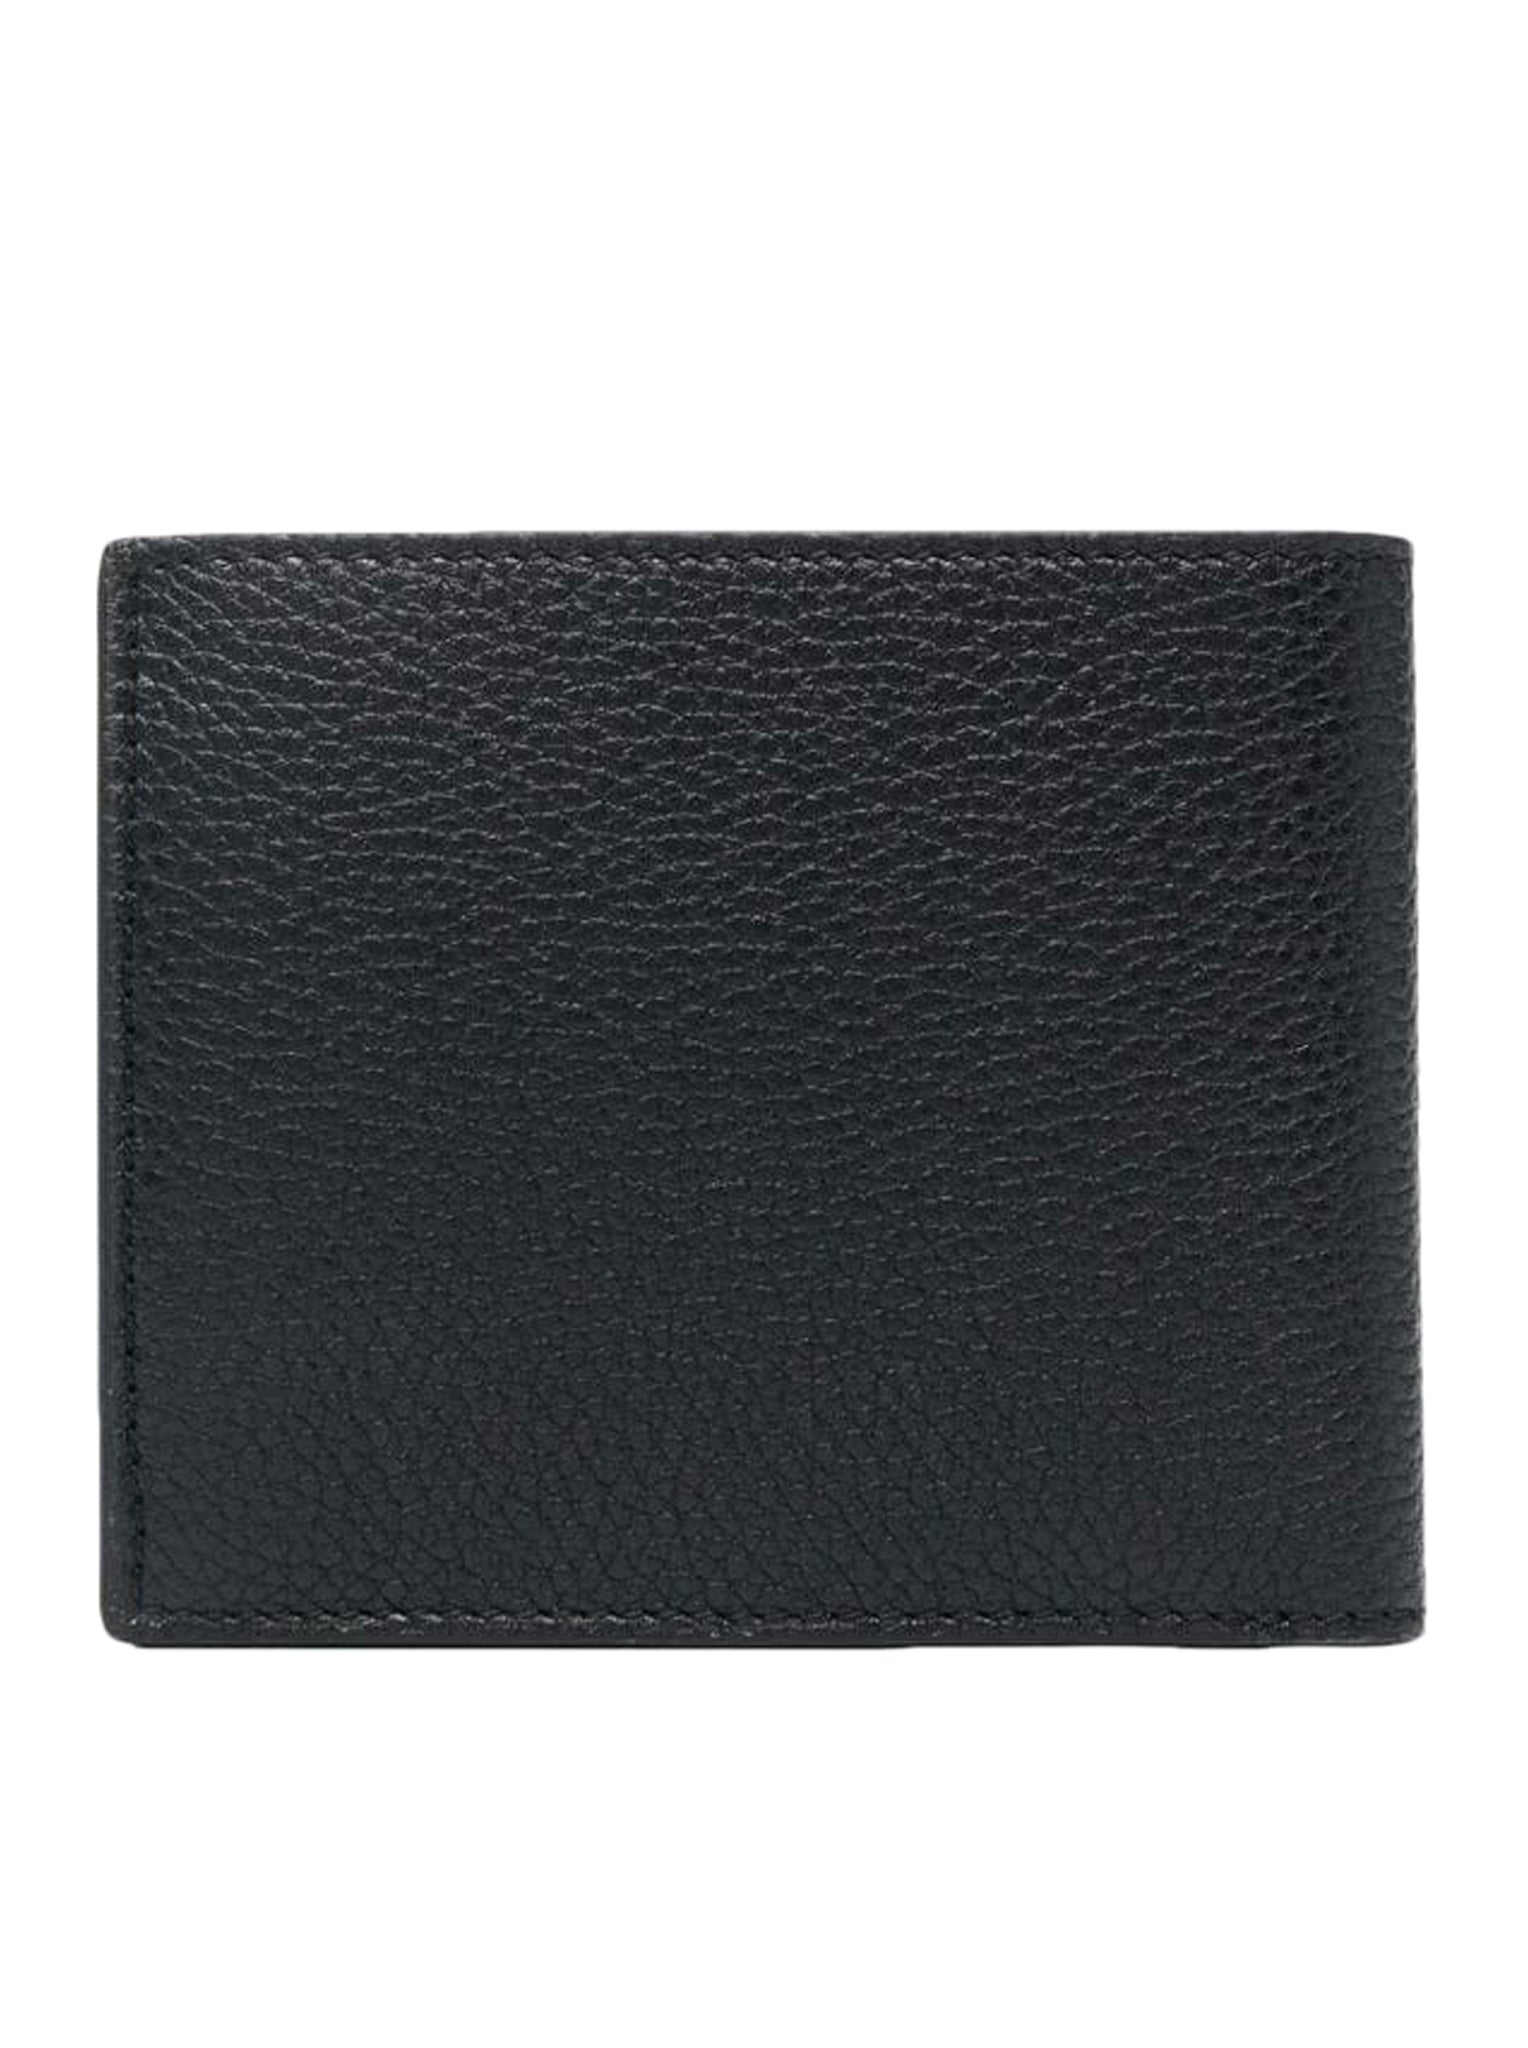 soft grain leather bifold wallet